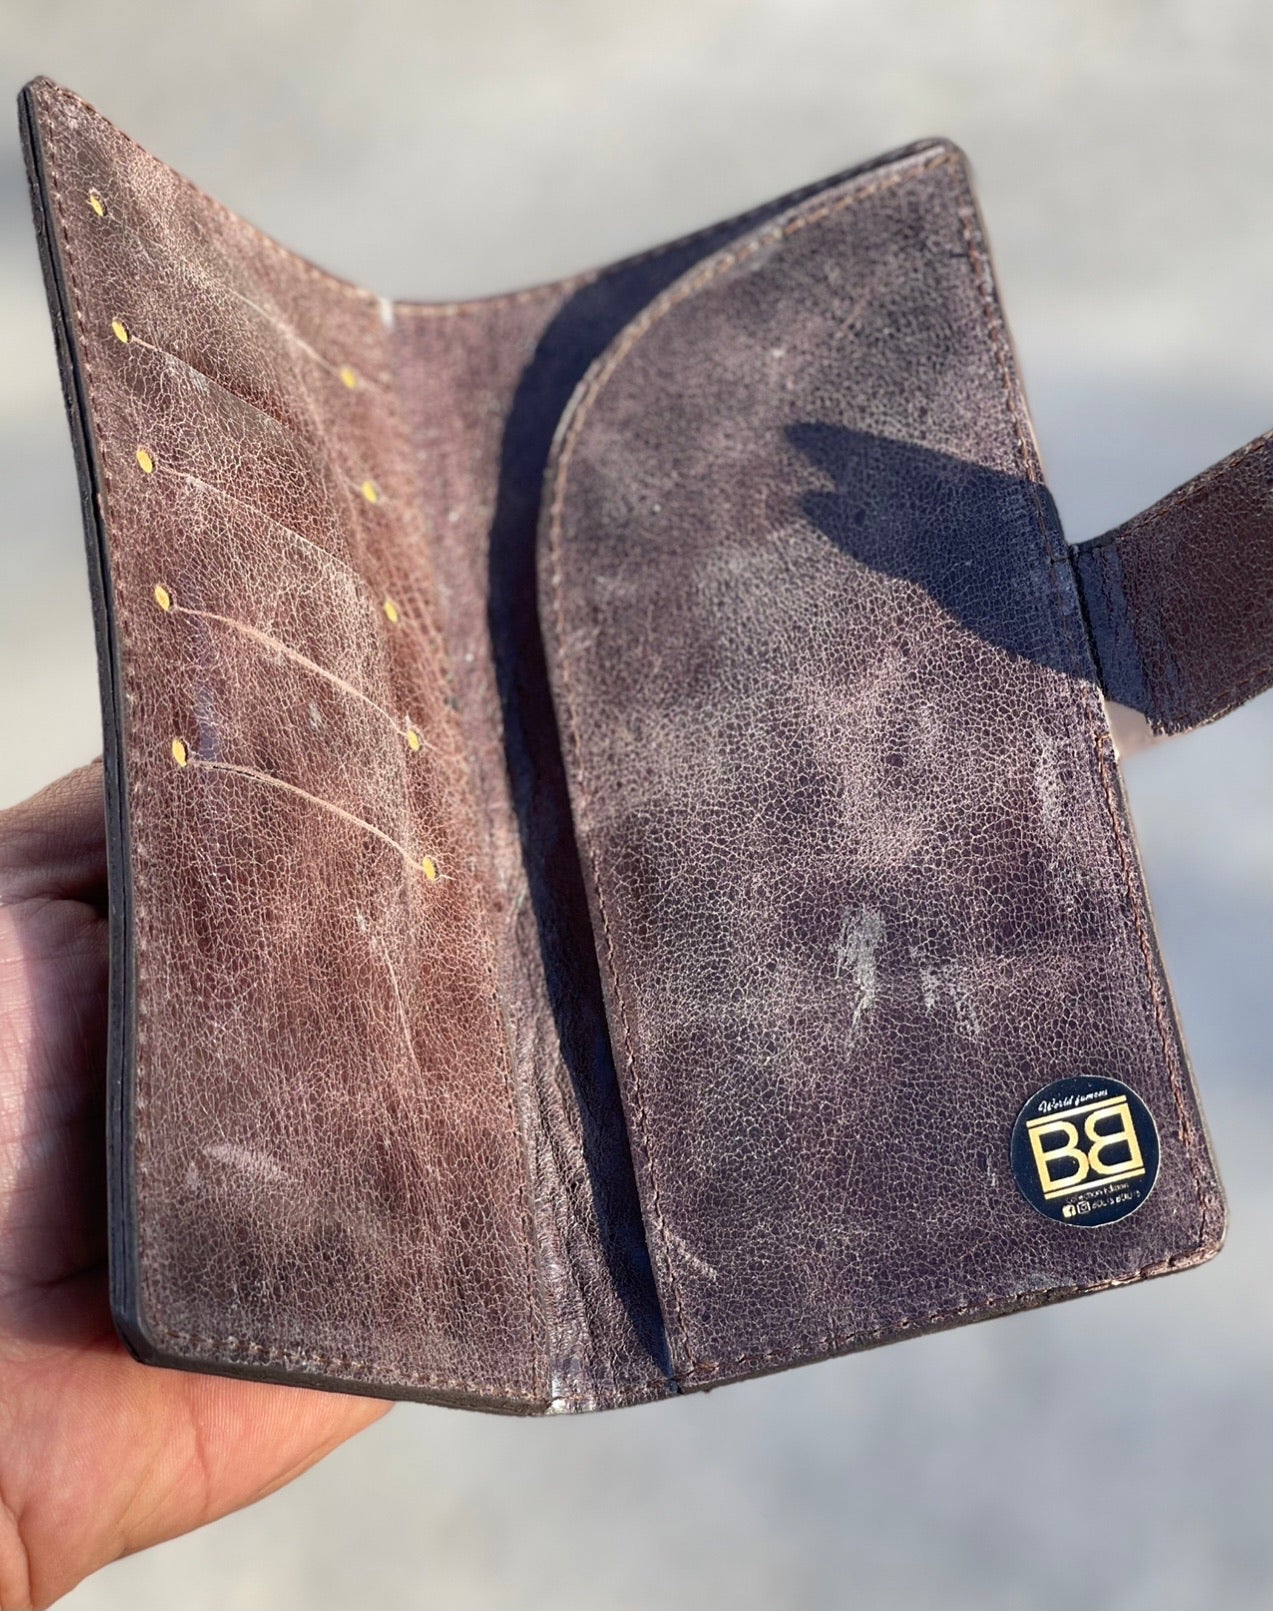 Cadd brown handtooled wallet